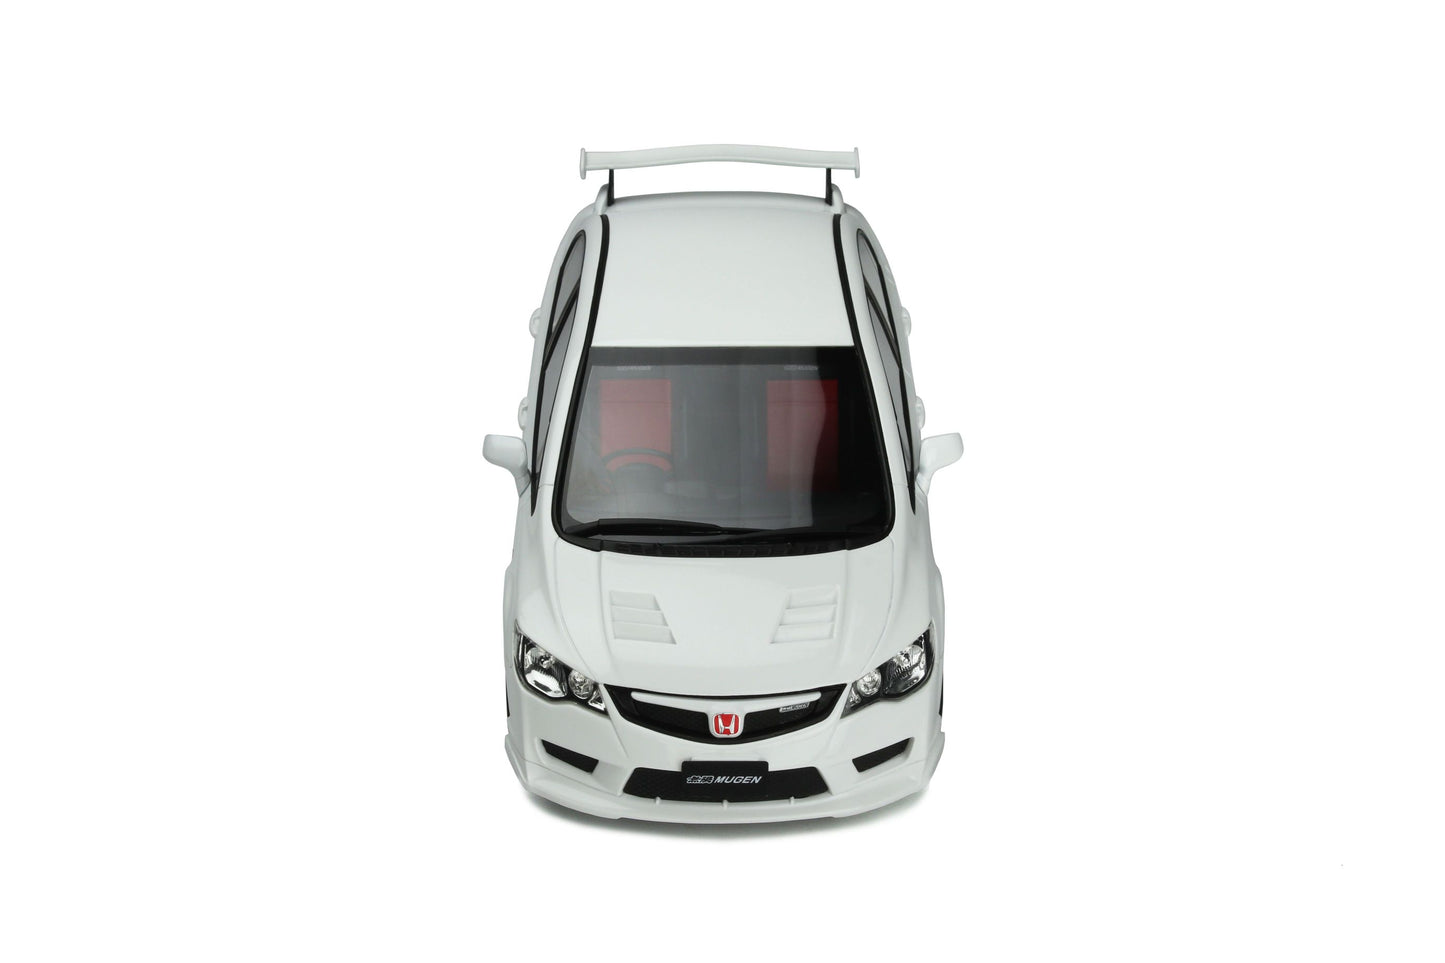 OttOmobile - Mugen Honda Civic Type R (FD2) (Mugen White) 1:18 Scale Model Car